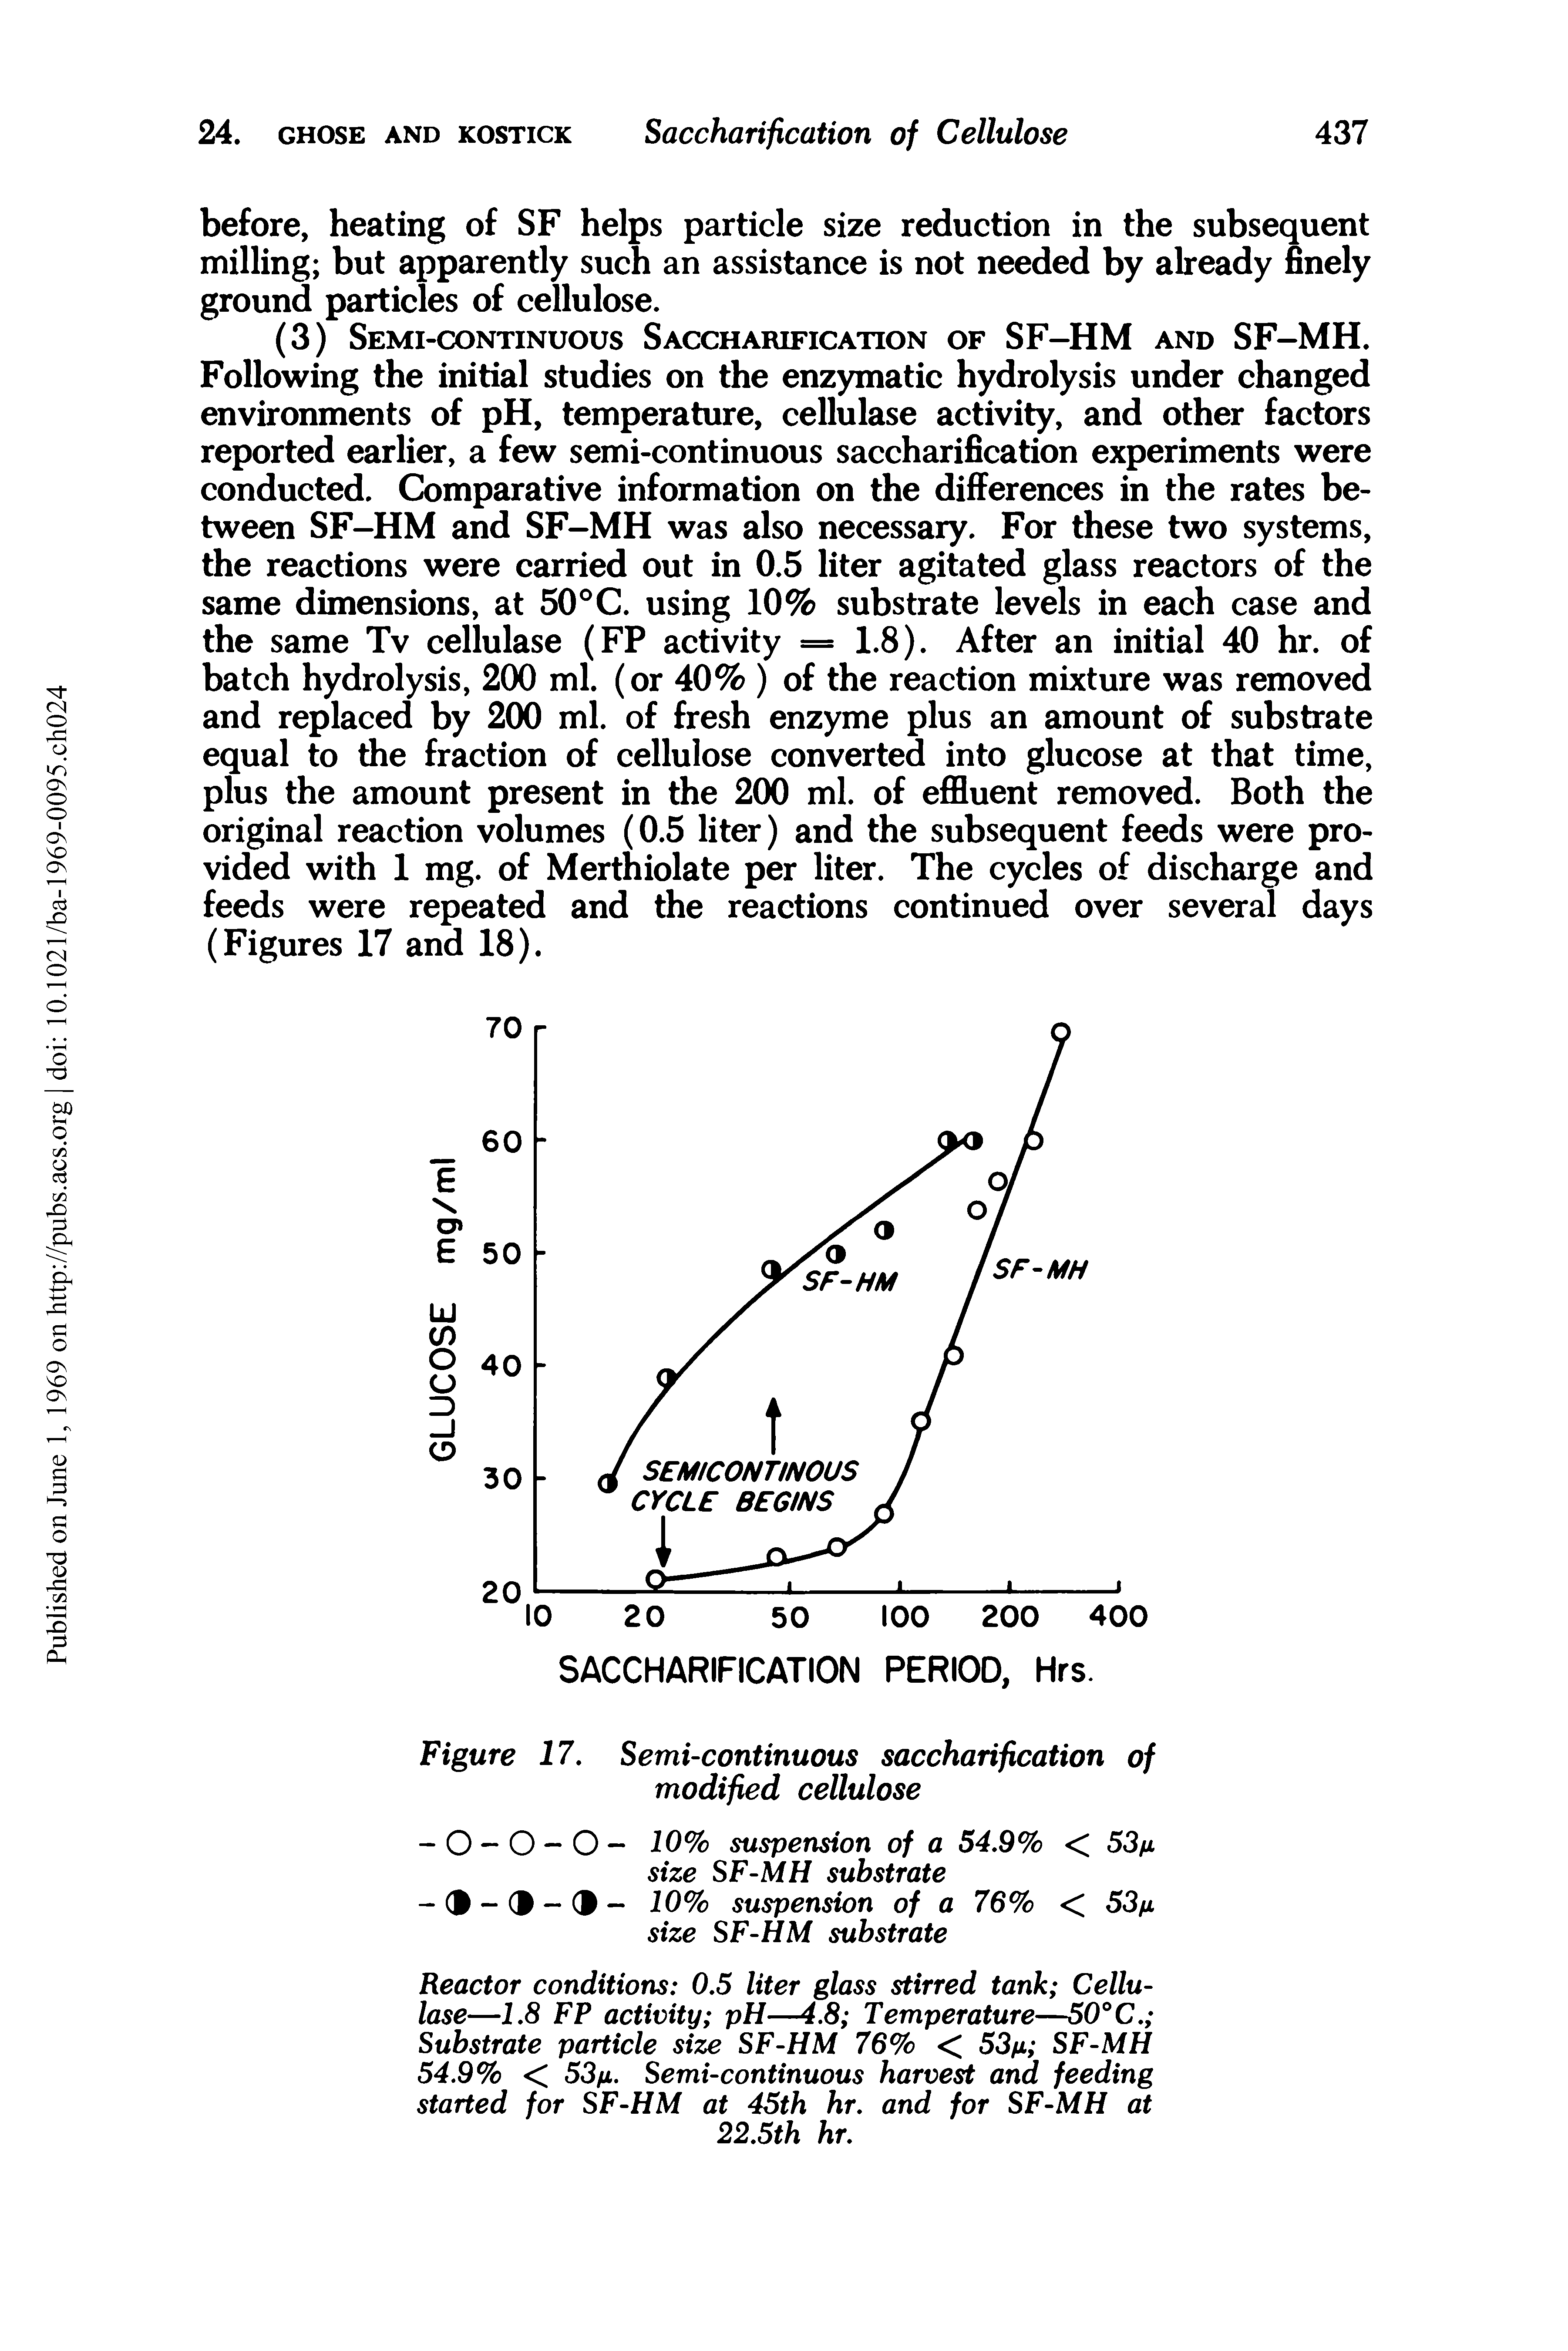 Figure 17. Semi-continuous saccharification of modified cellulose...